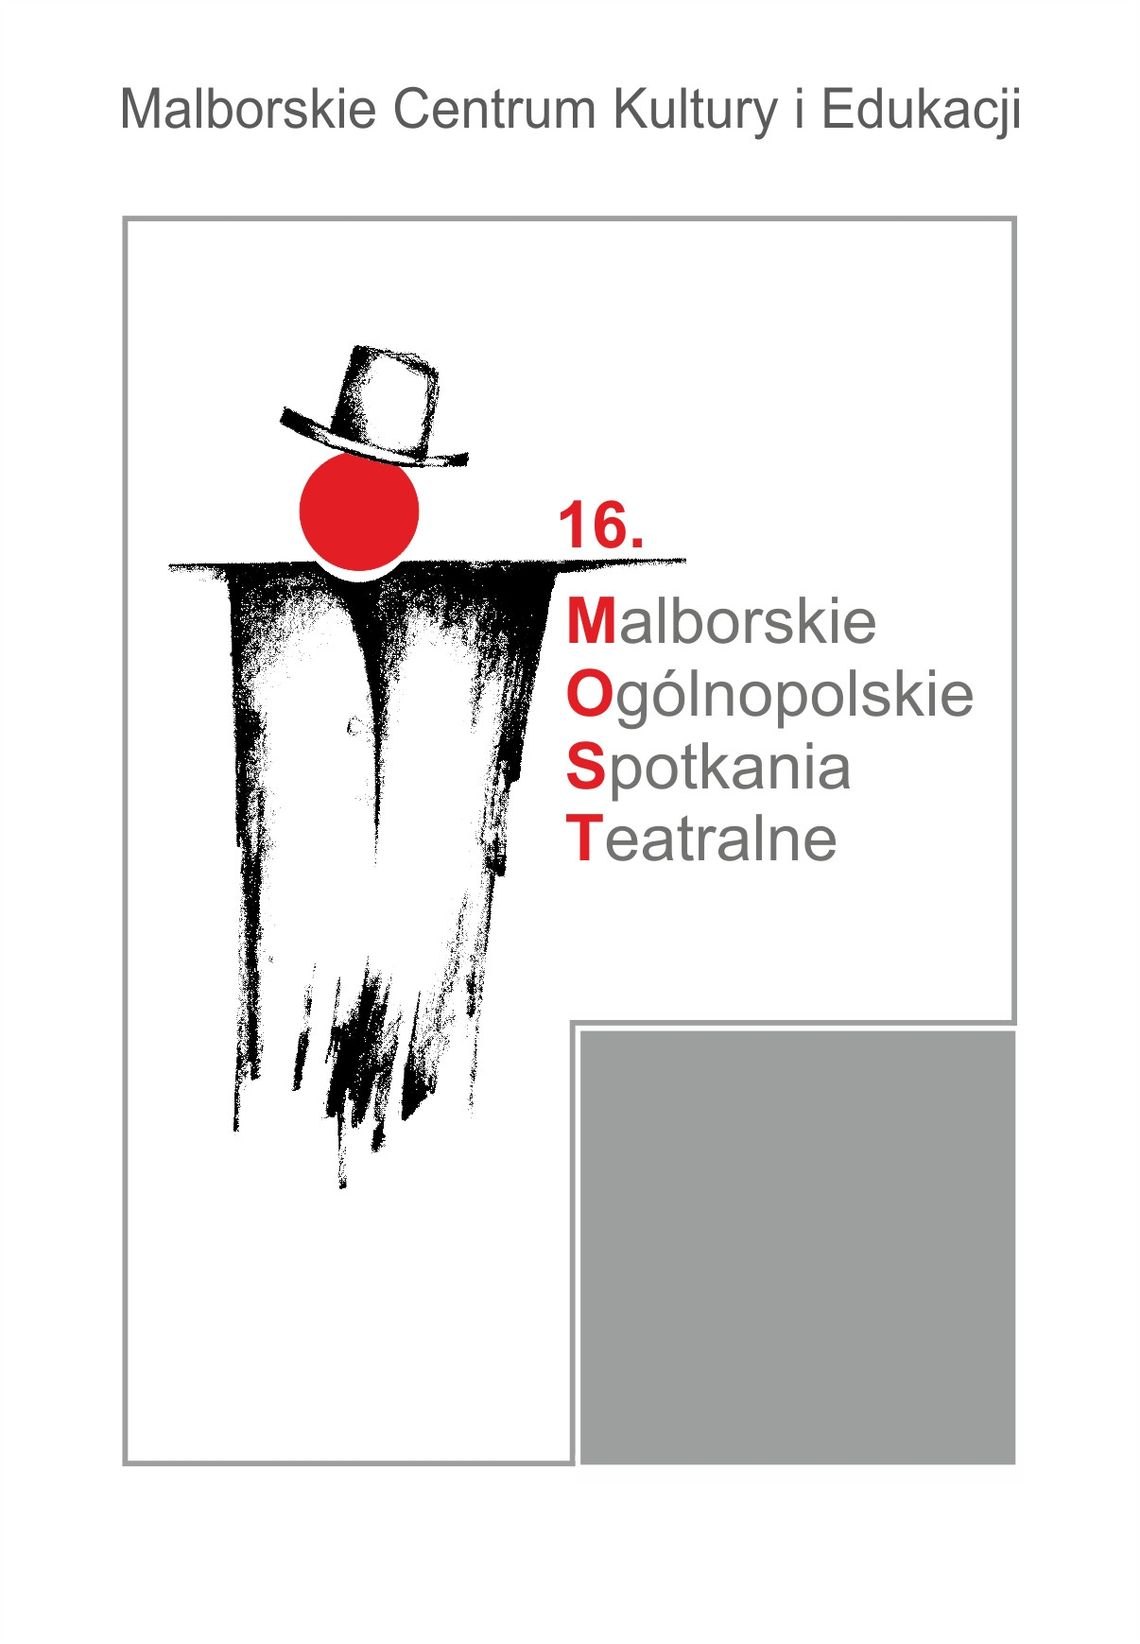 Malborskie Ogólnopolskie Spotkania Teatralne 2019